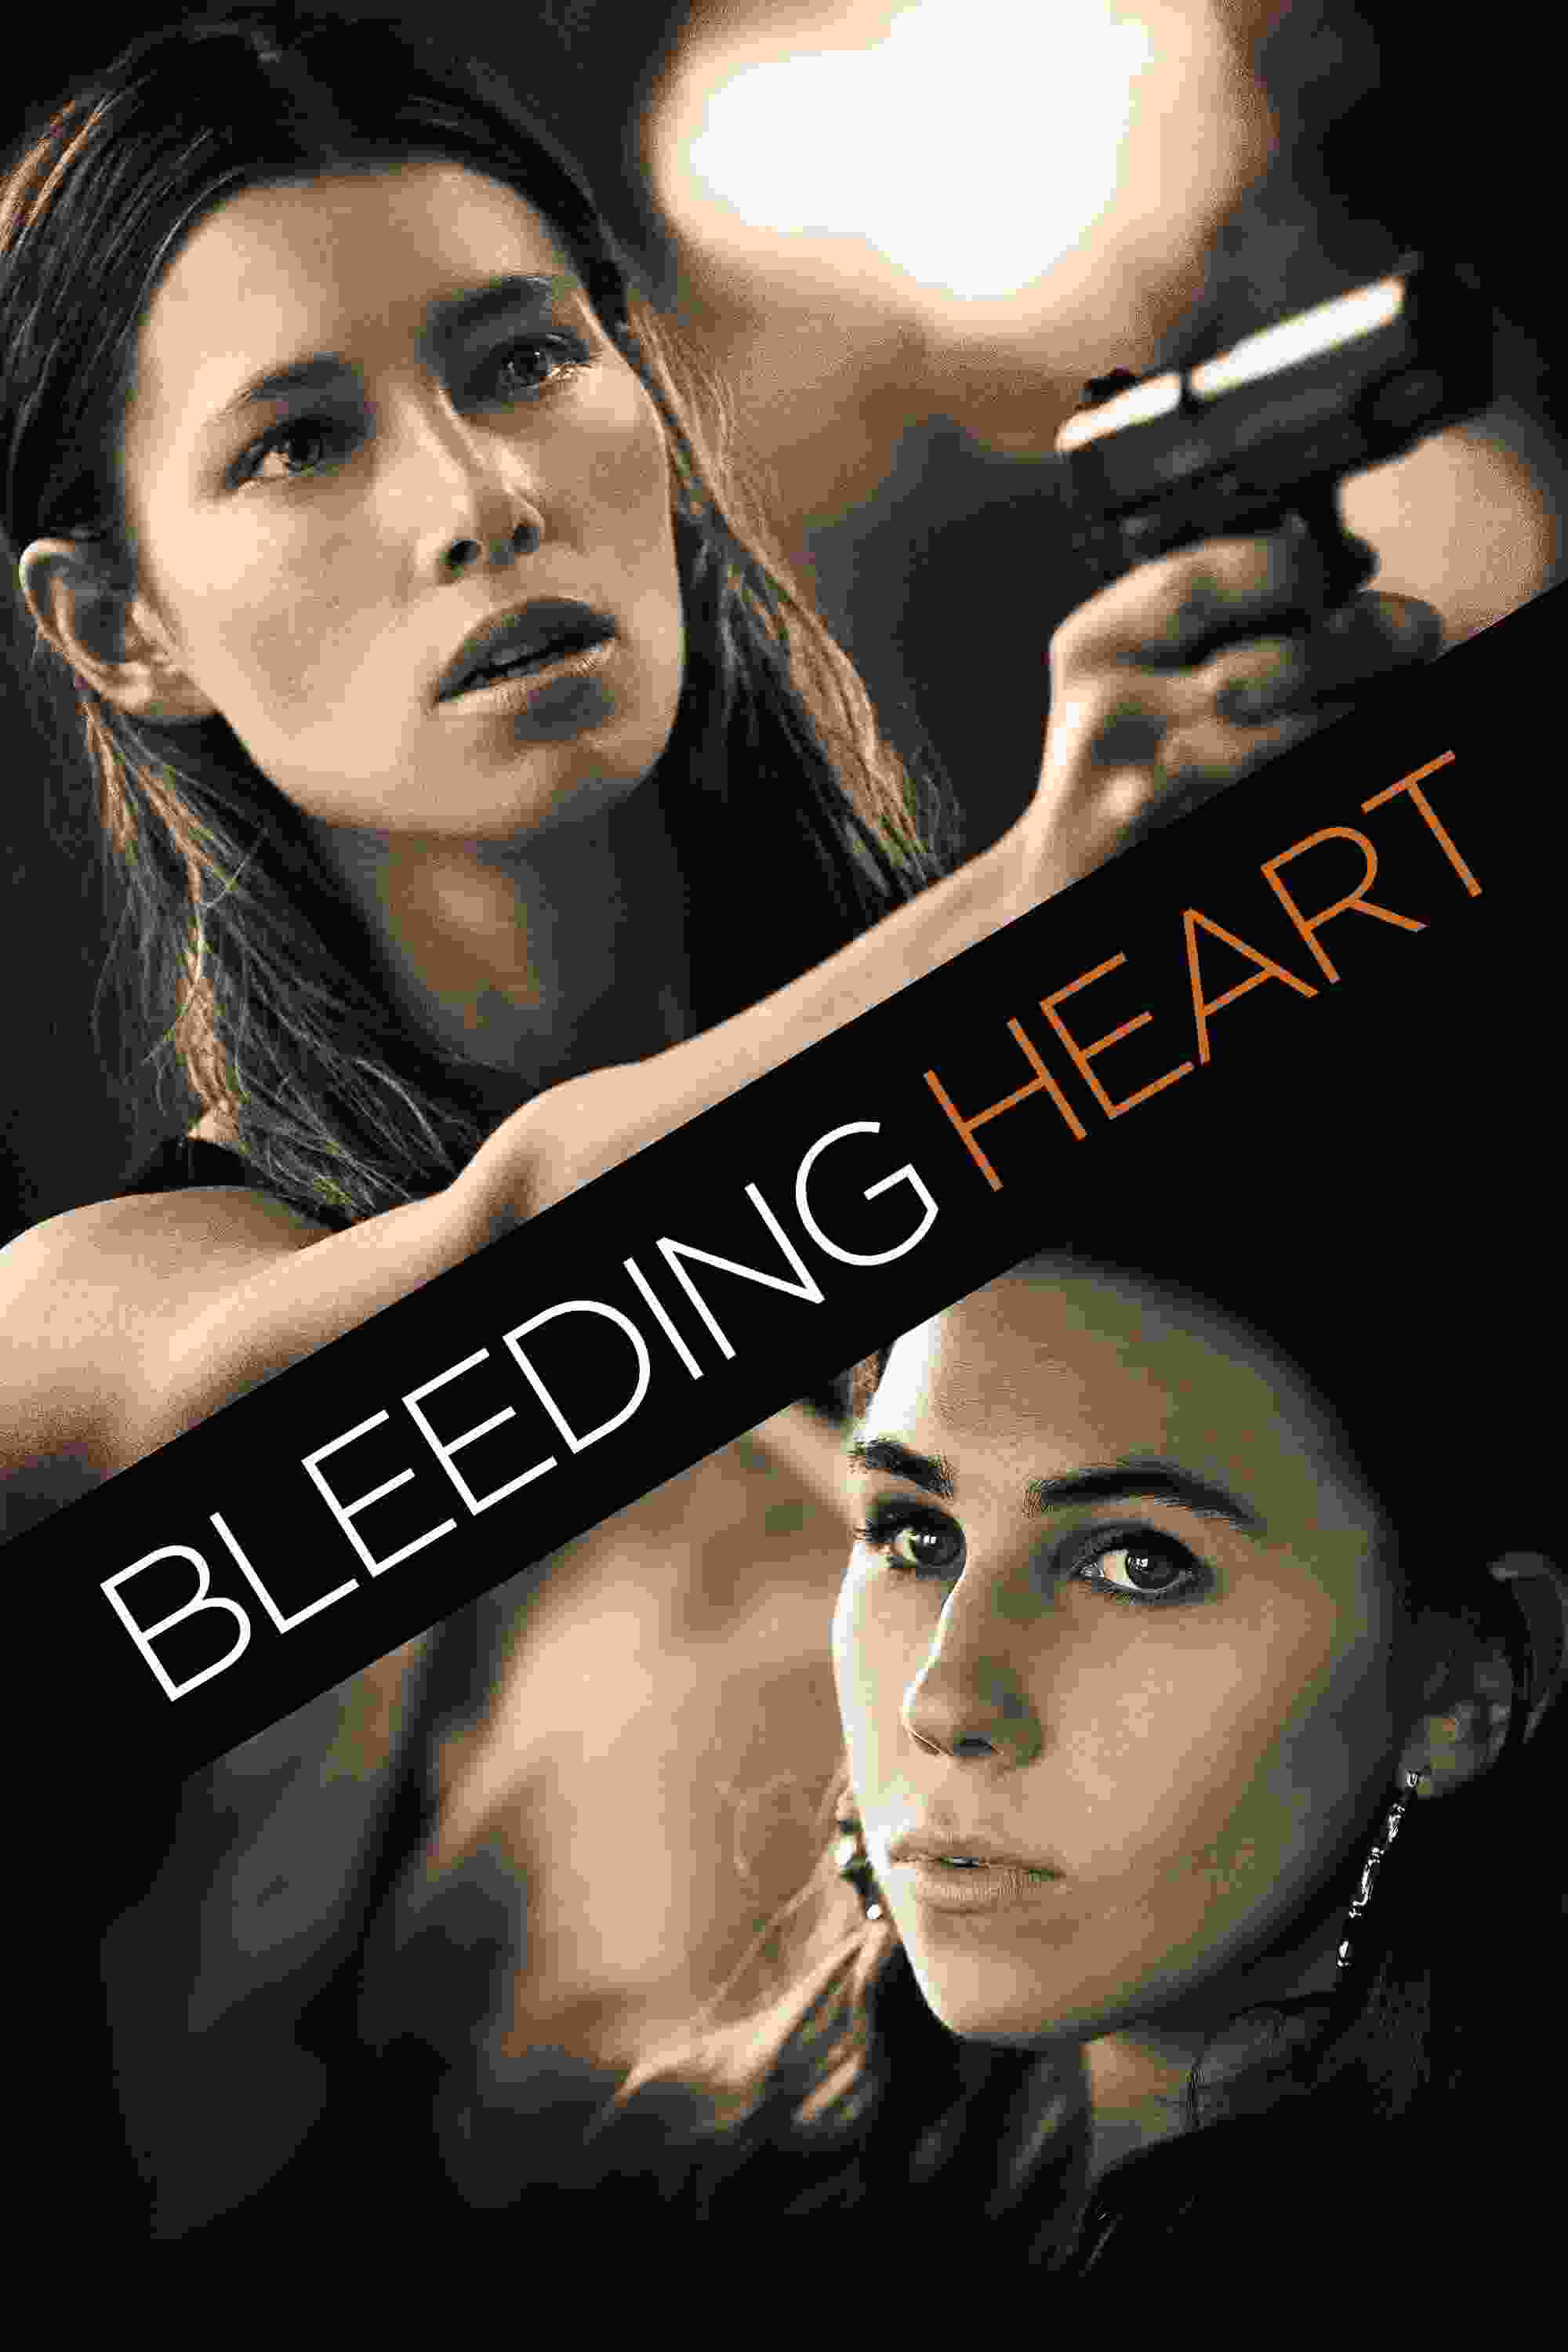 Bleeding Heart (2015) Jessica Biel